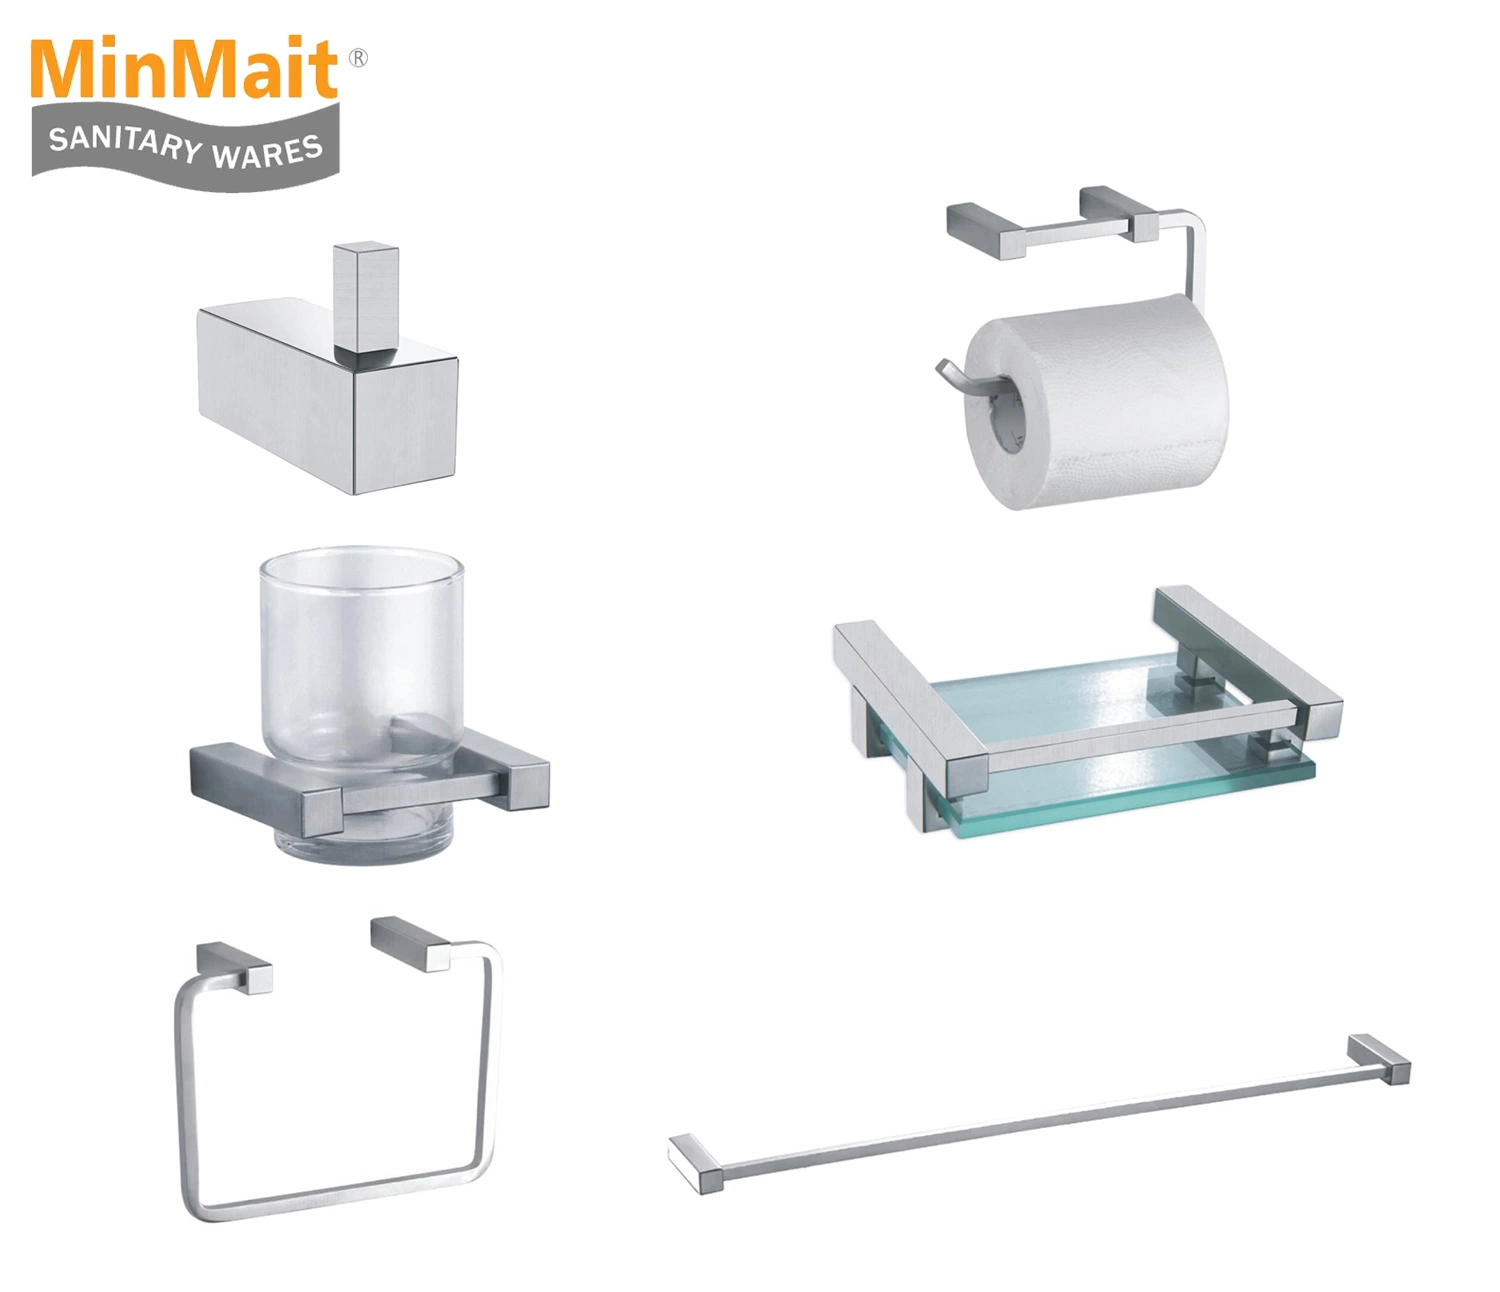 Sanitary Ware Stainless Steel Luxury Bathroom Fittings Accessories Mx-7300